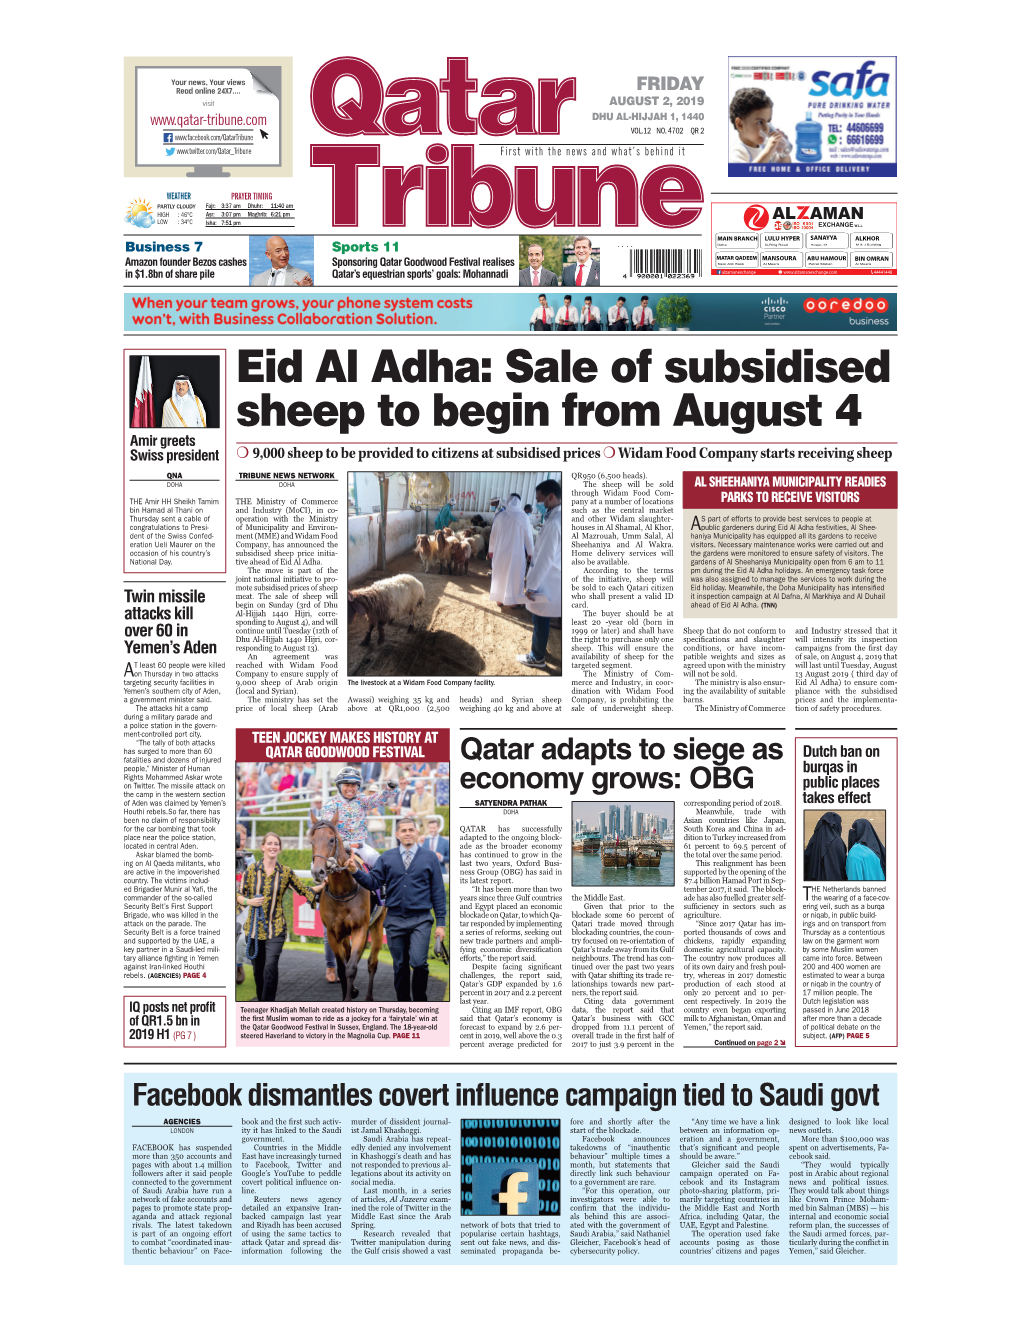 Eid Al Adha: Sale of Subsidised Sheep to Begin from August 4